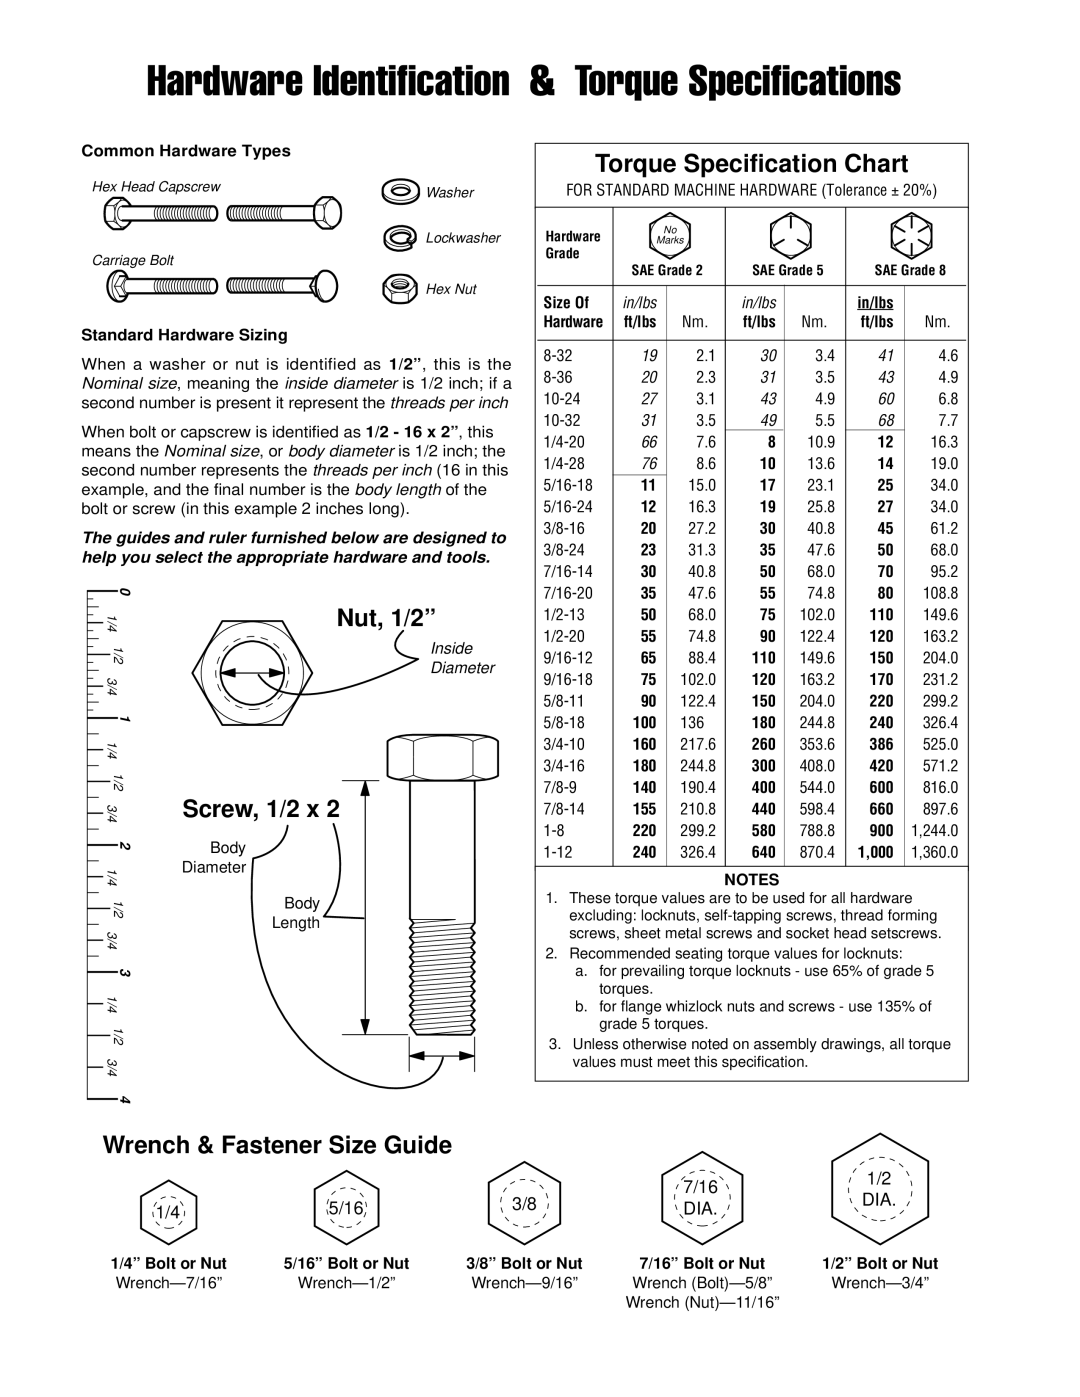 Simplicity 1693756 Hardware Identification & Torque Specifications, Torque Specification Chart, Nut, 1/2”, Screw, 1/2 x 